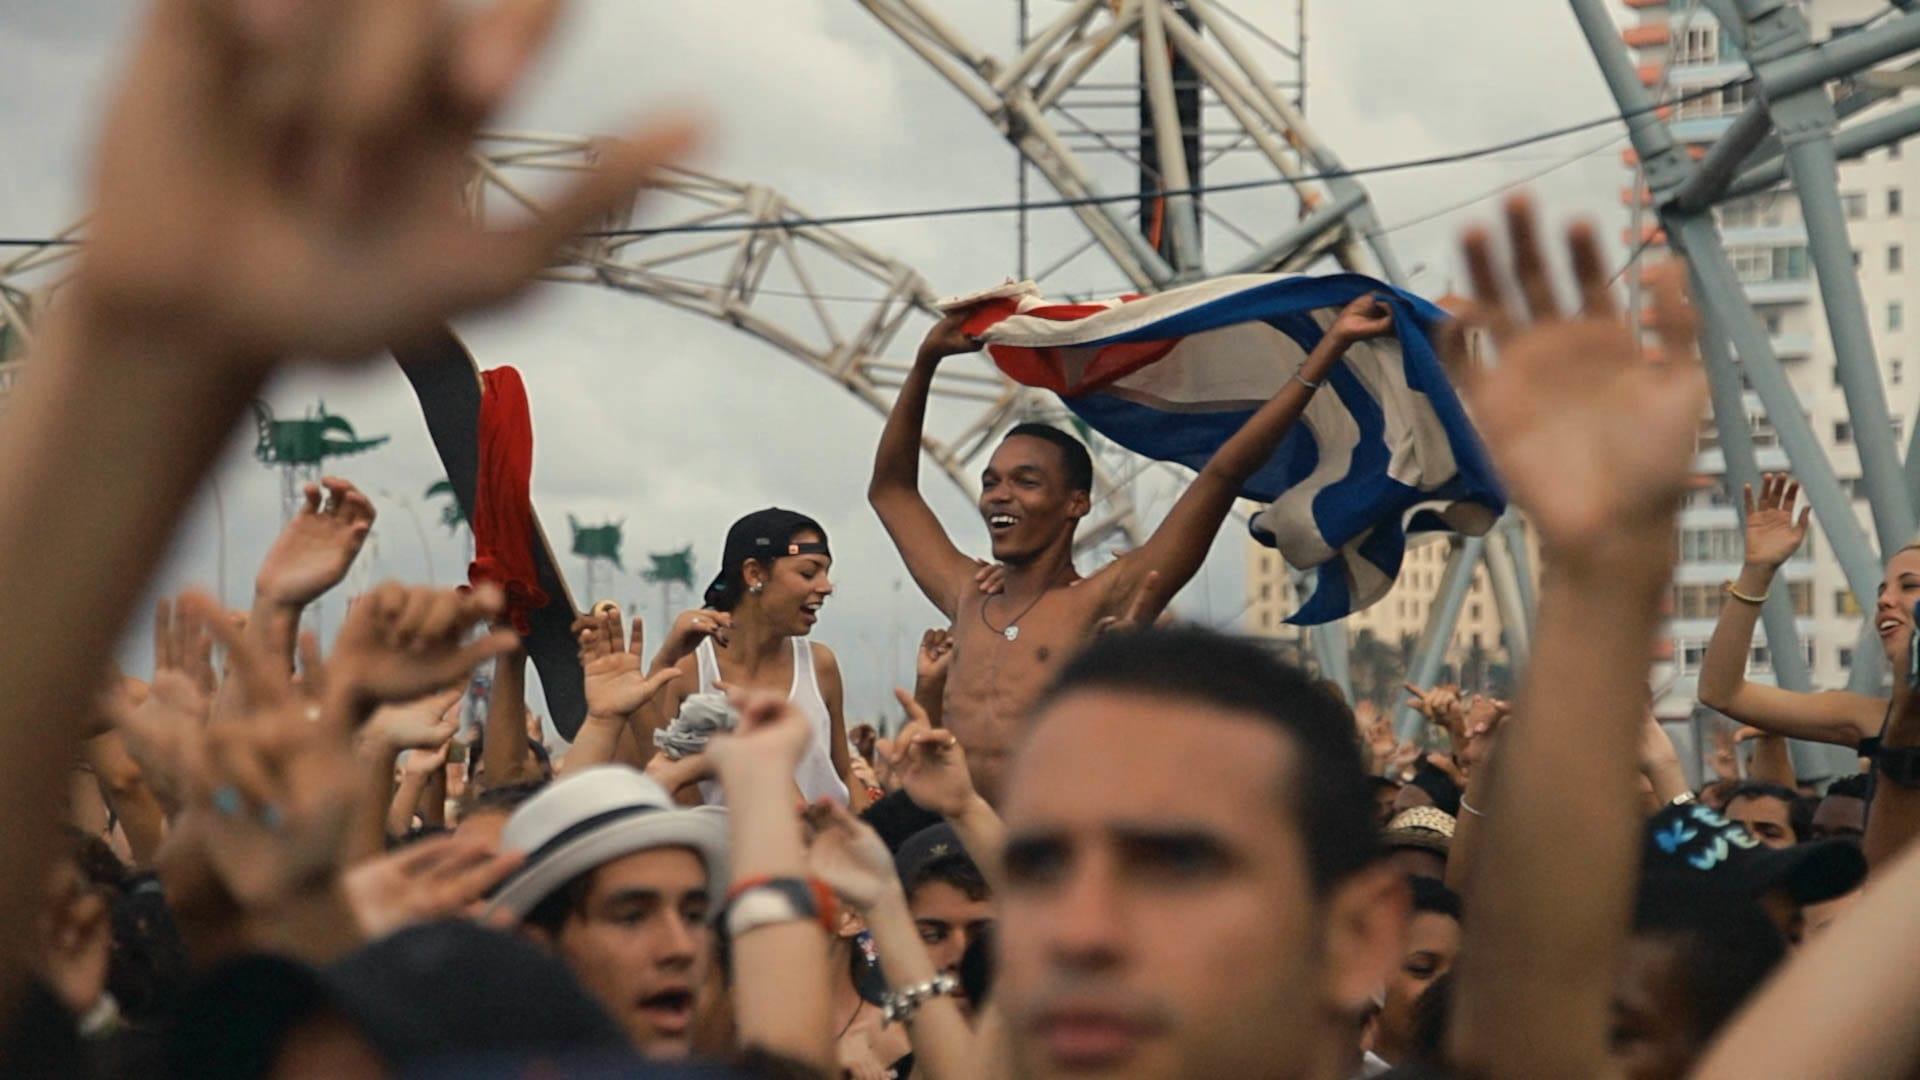 Give Me Future: Major Lazer in Cuba backdrop